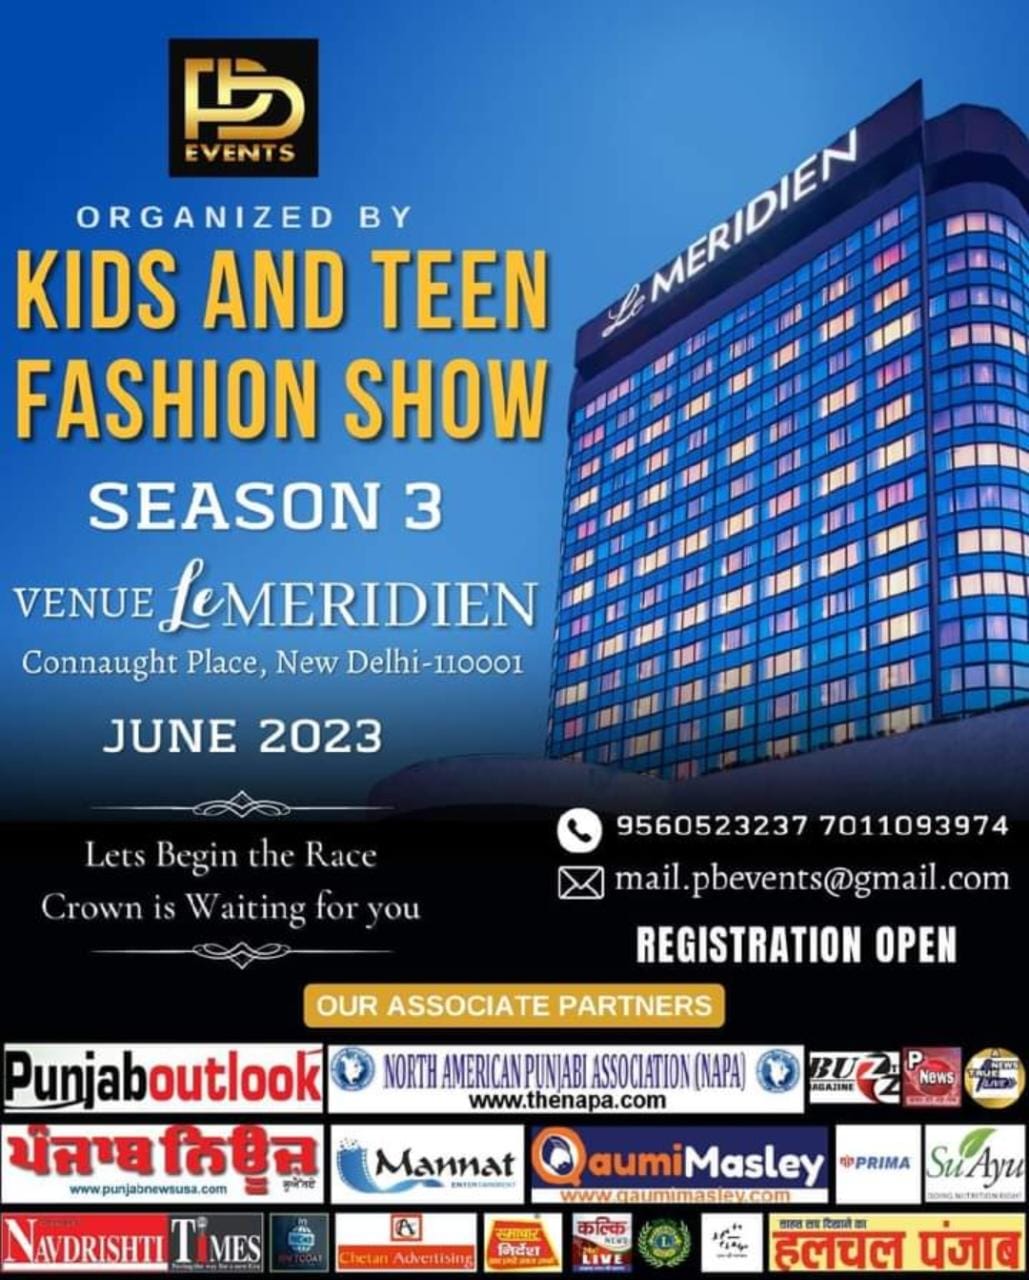 Teen and kids fashion show 2023 